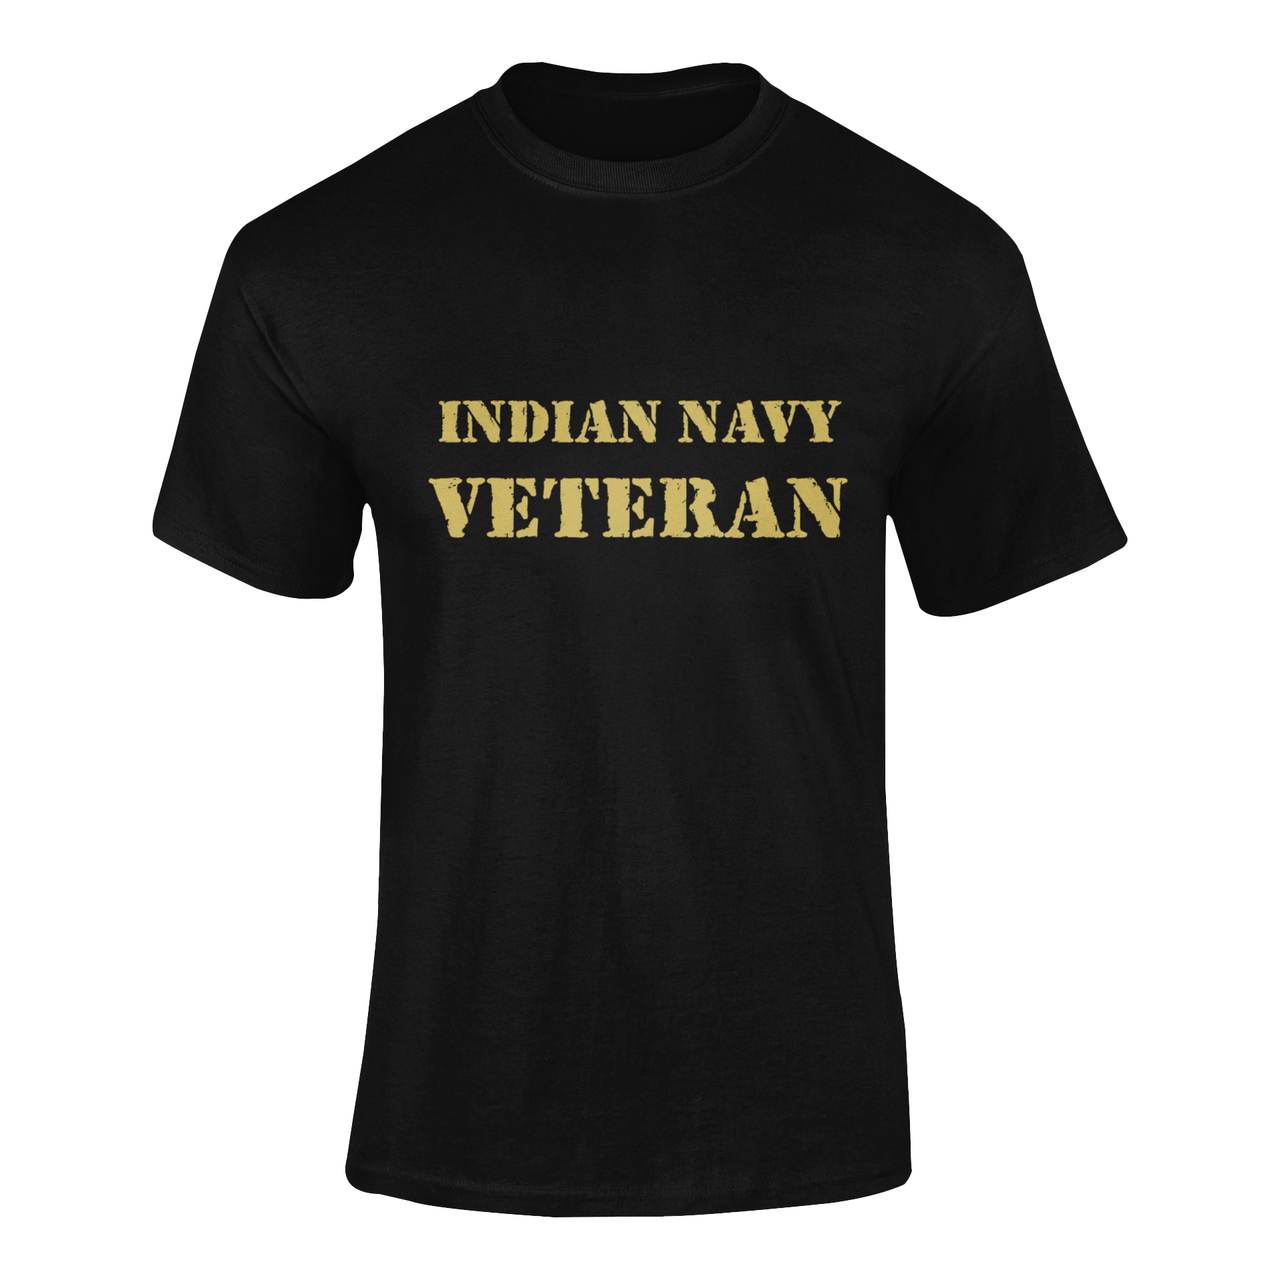 Navy T-shirt - Indian Navy Veteran (Men)